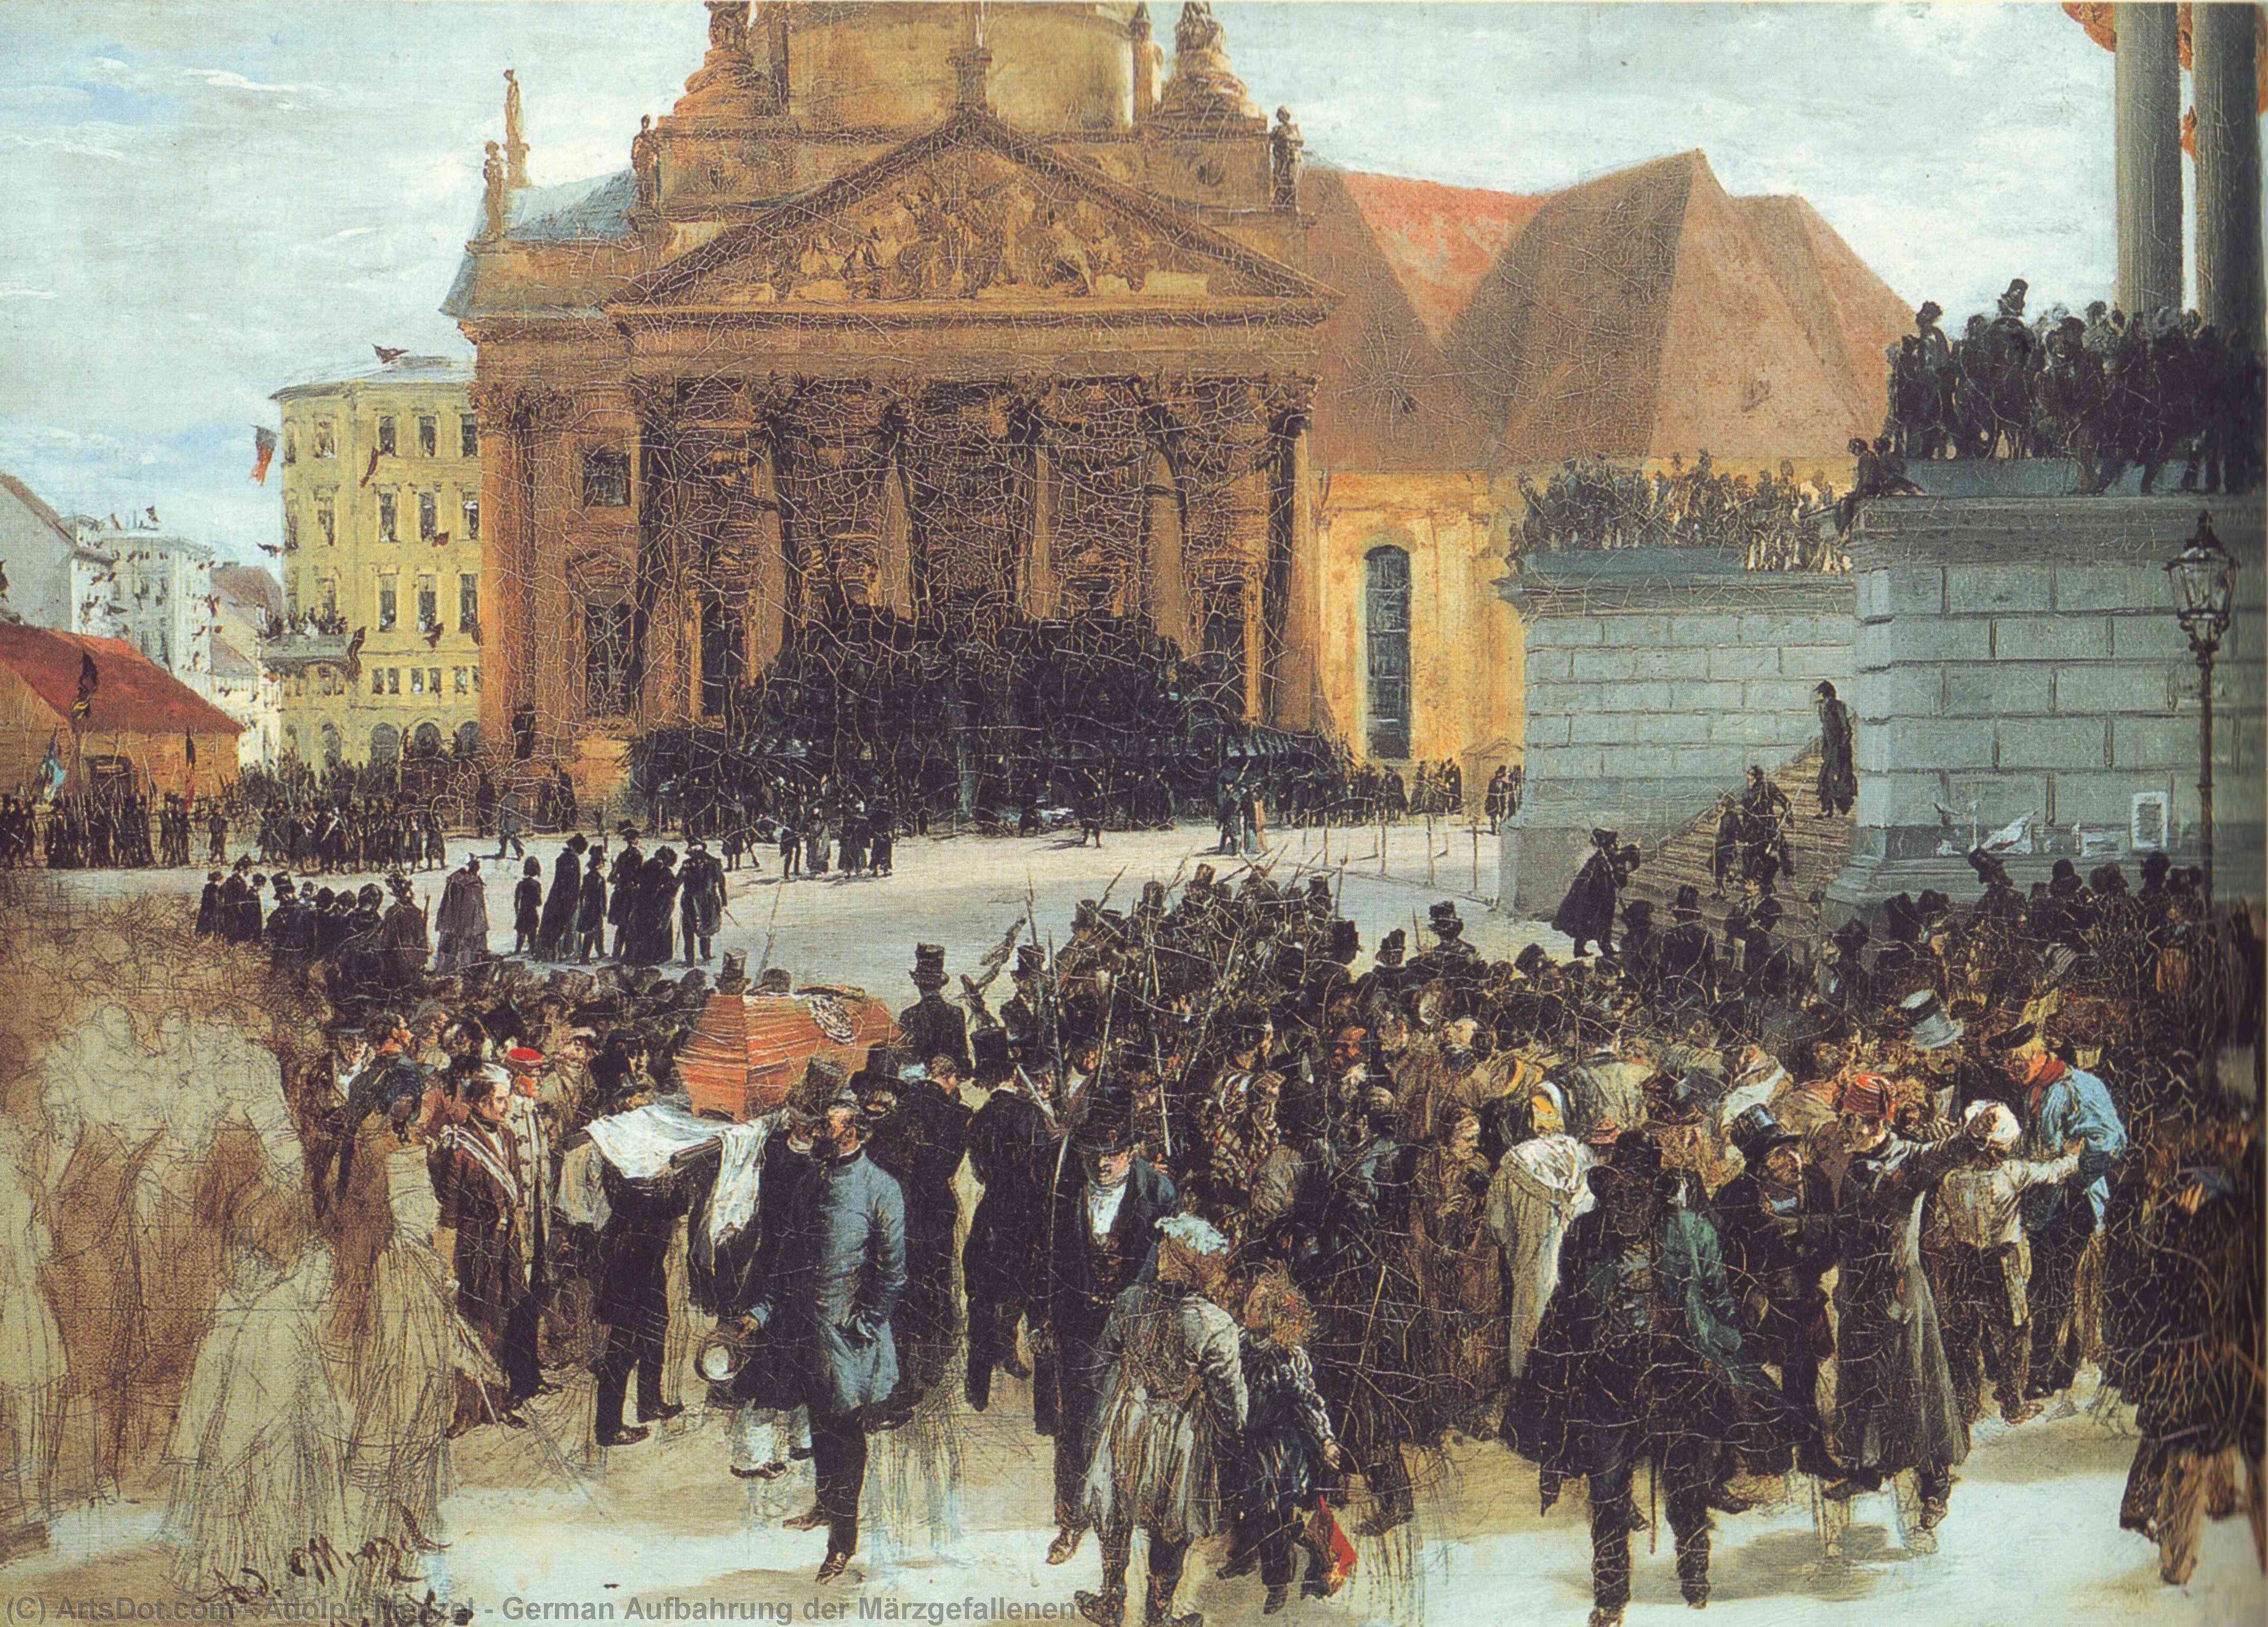 Buy Museum Art Reproductions German Aufbahrung der Märzgefallenen, 1848 by Adolph Menzel | ArtsDot.com